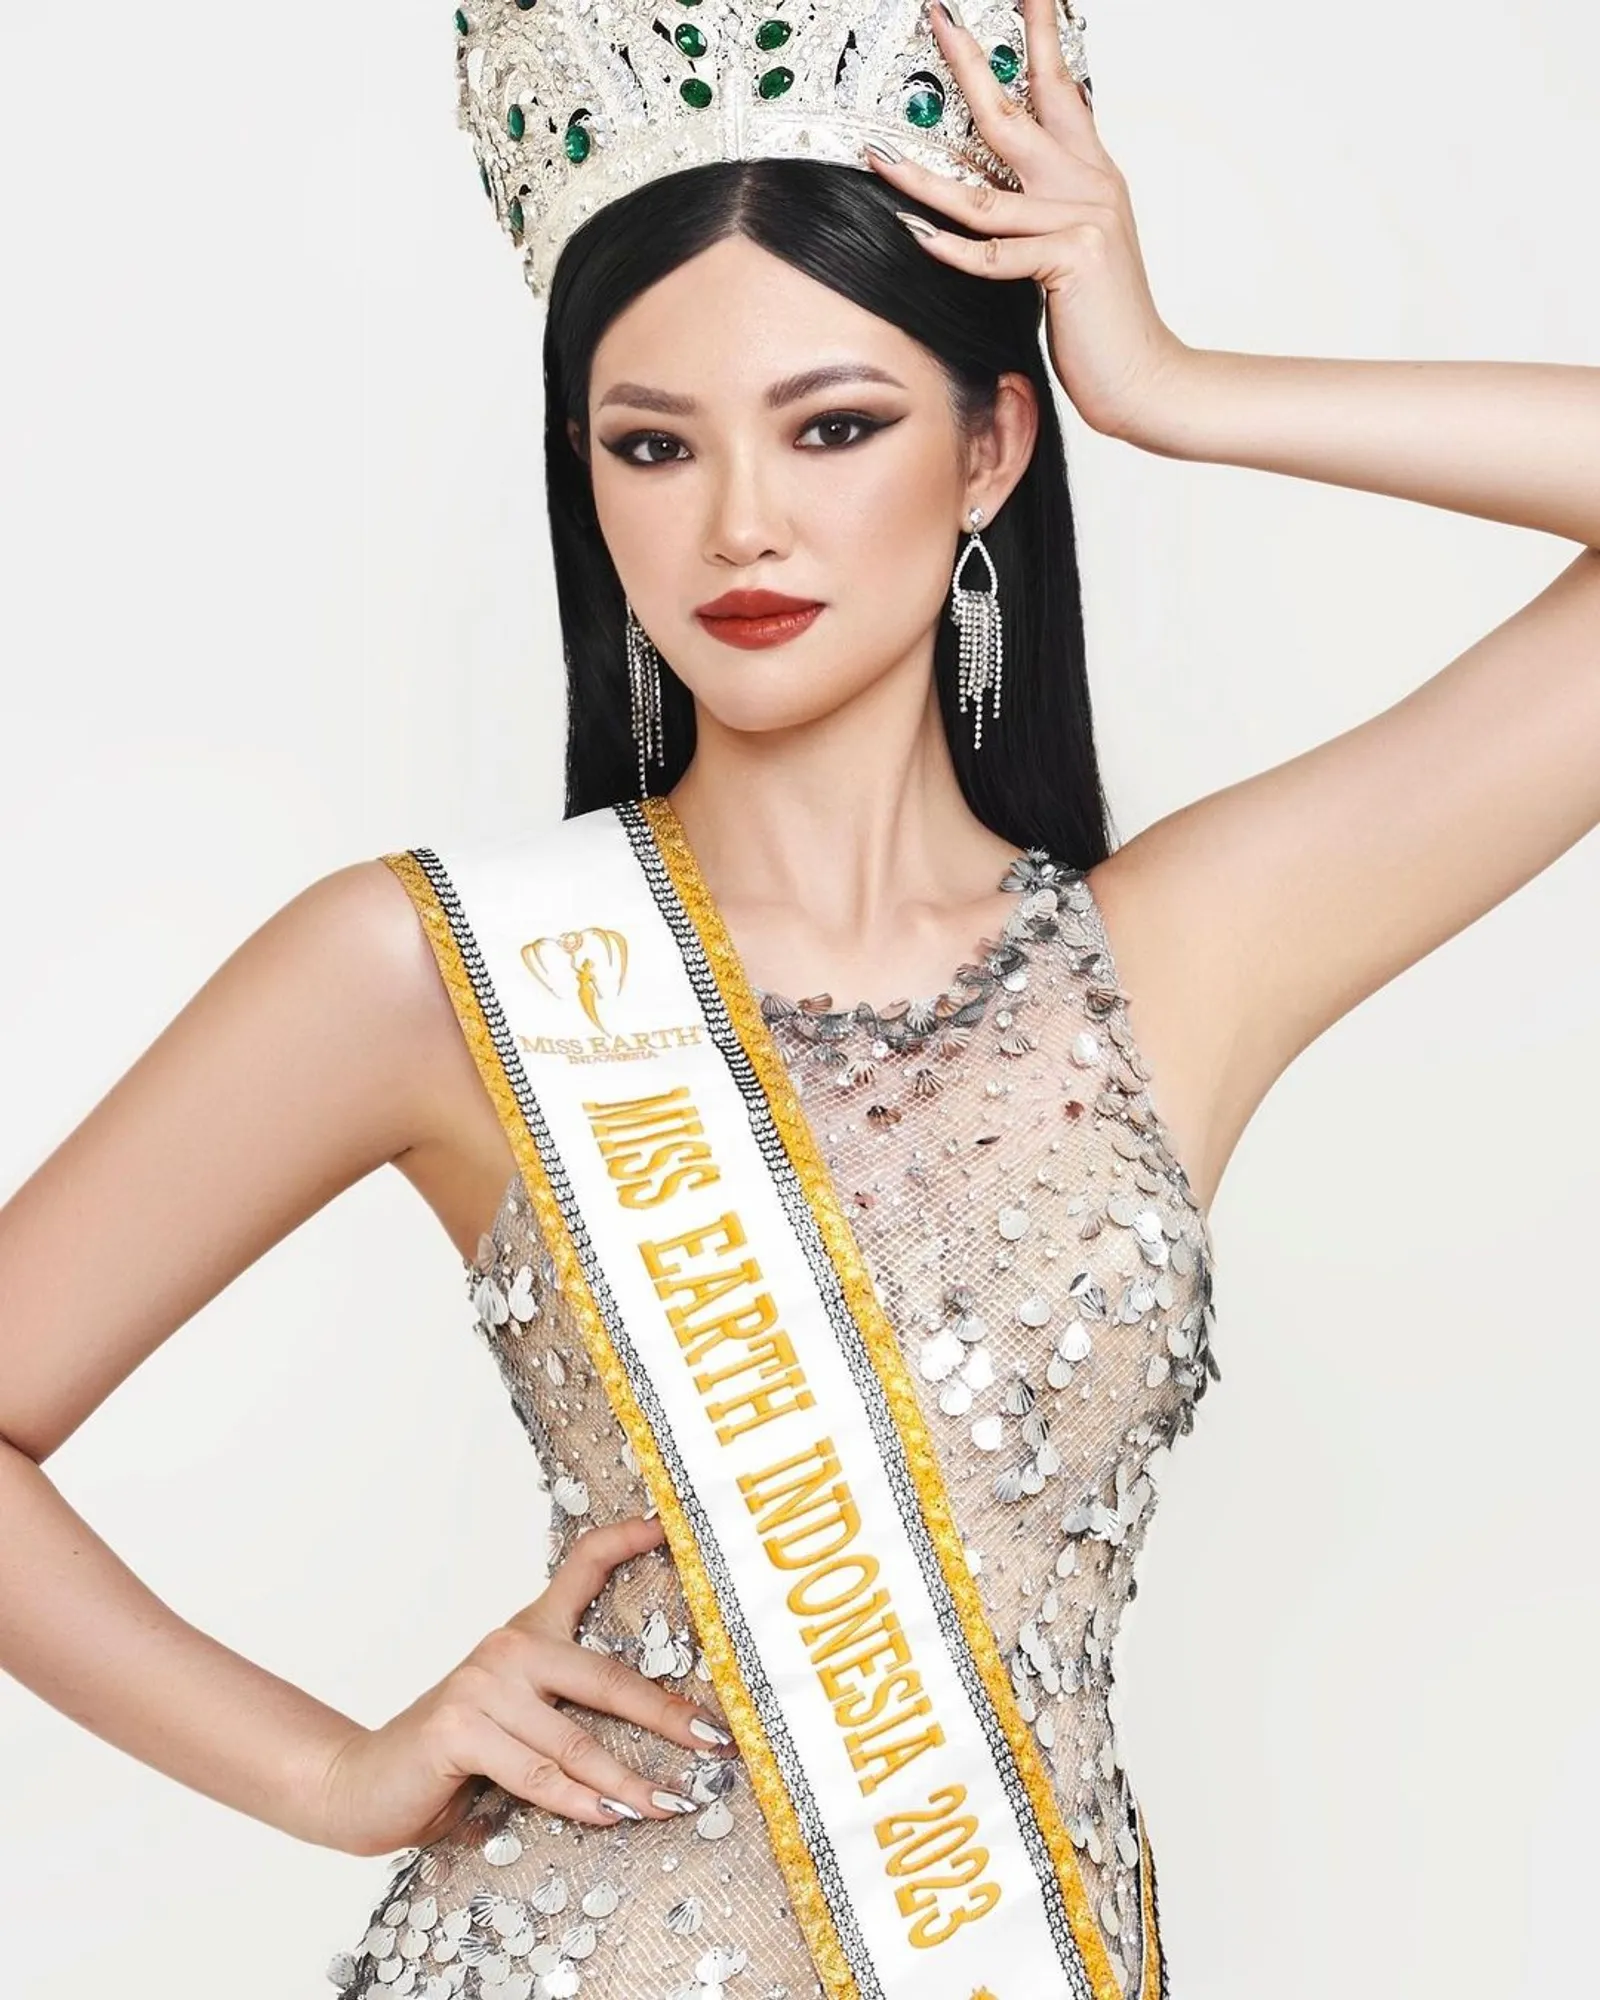 Profil Cindy Inanto, Wakili Indonesia di Ajang Miss Earth 2023